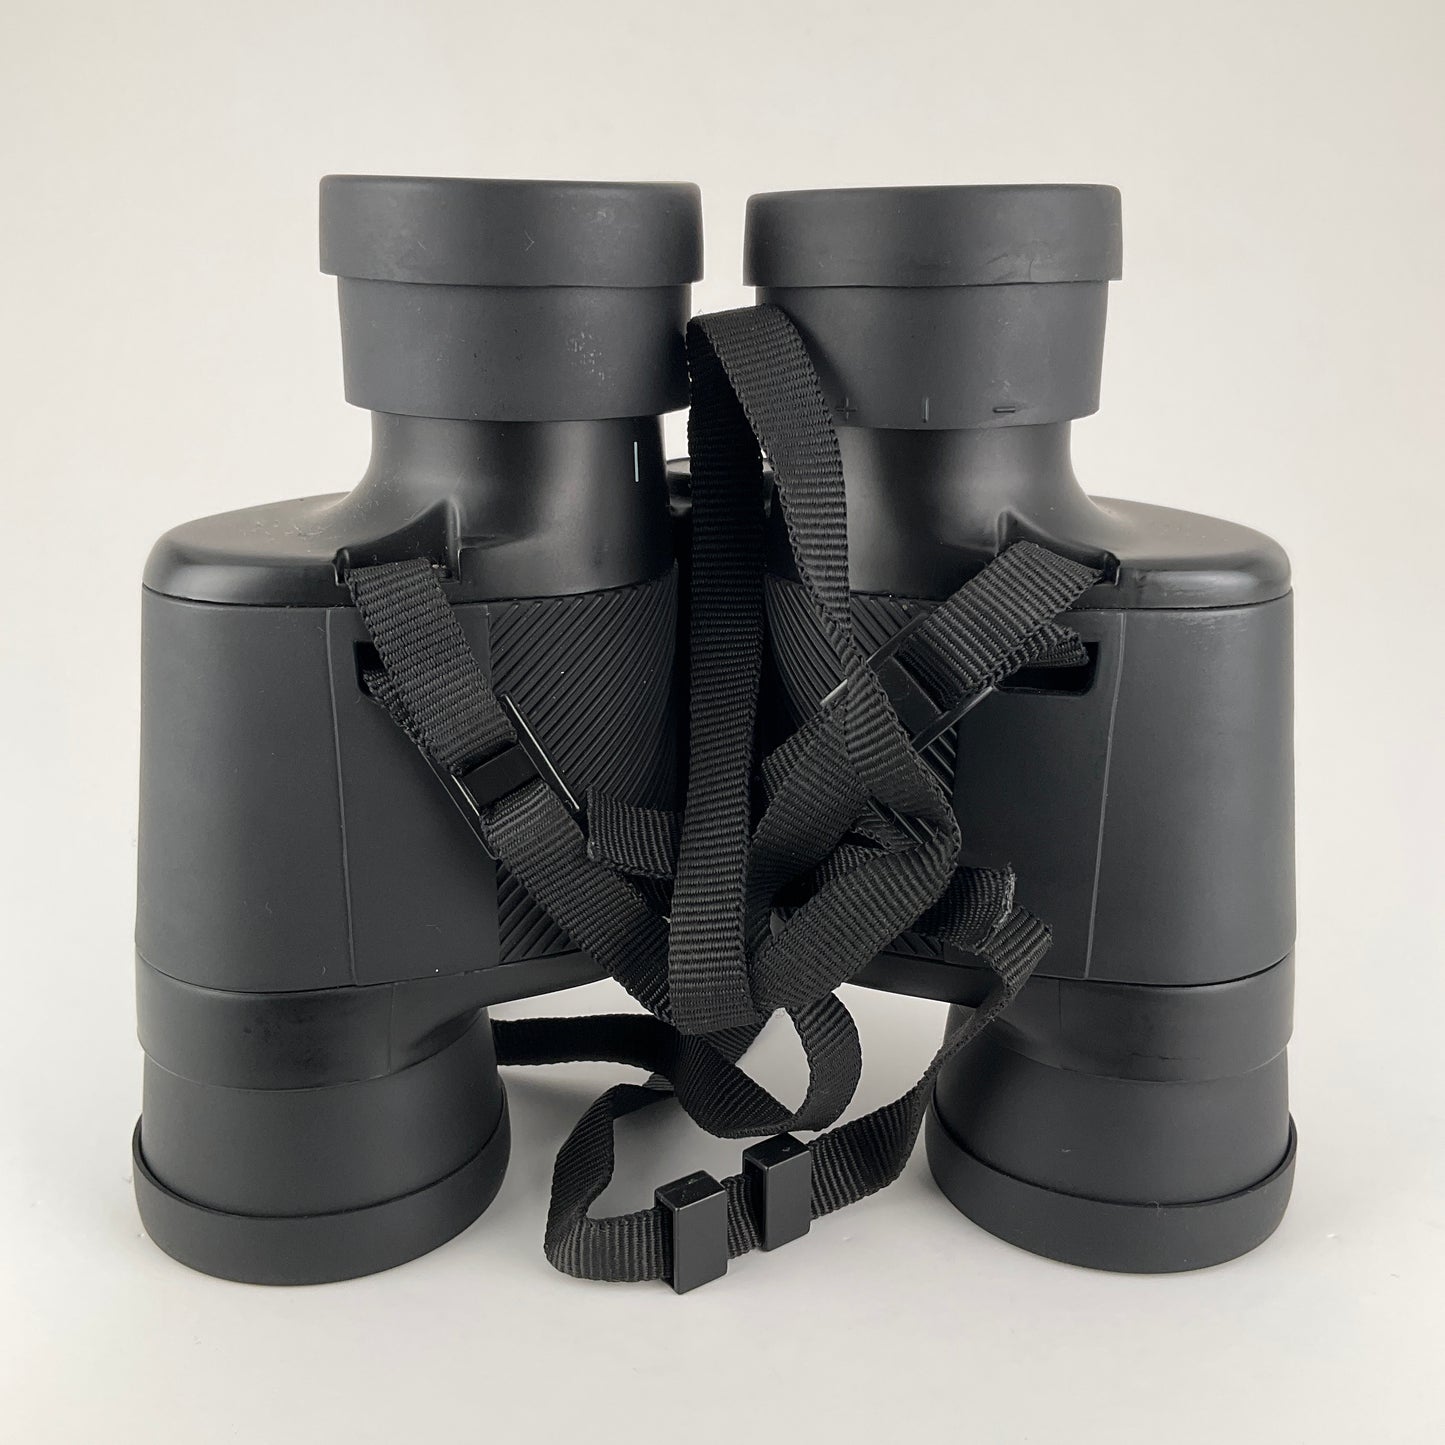 MCSLCO - 8x40 Binoculars